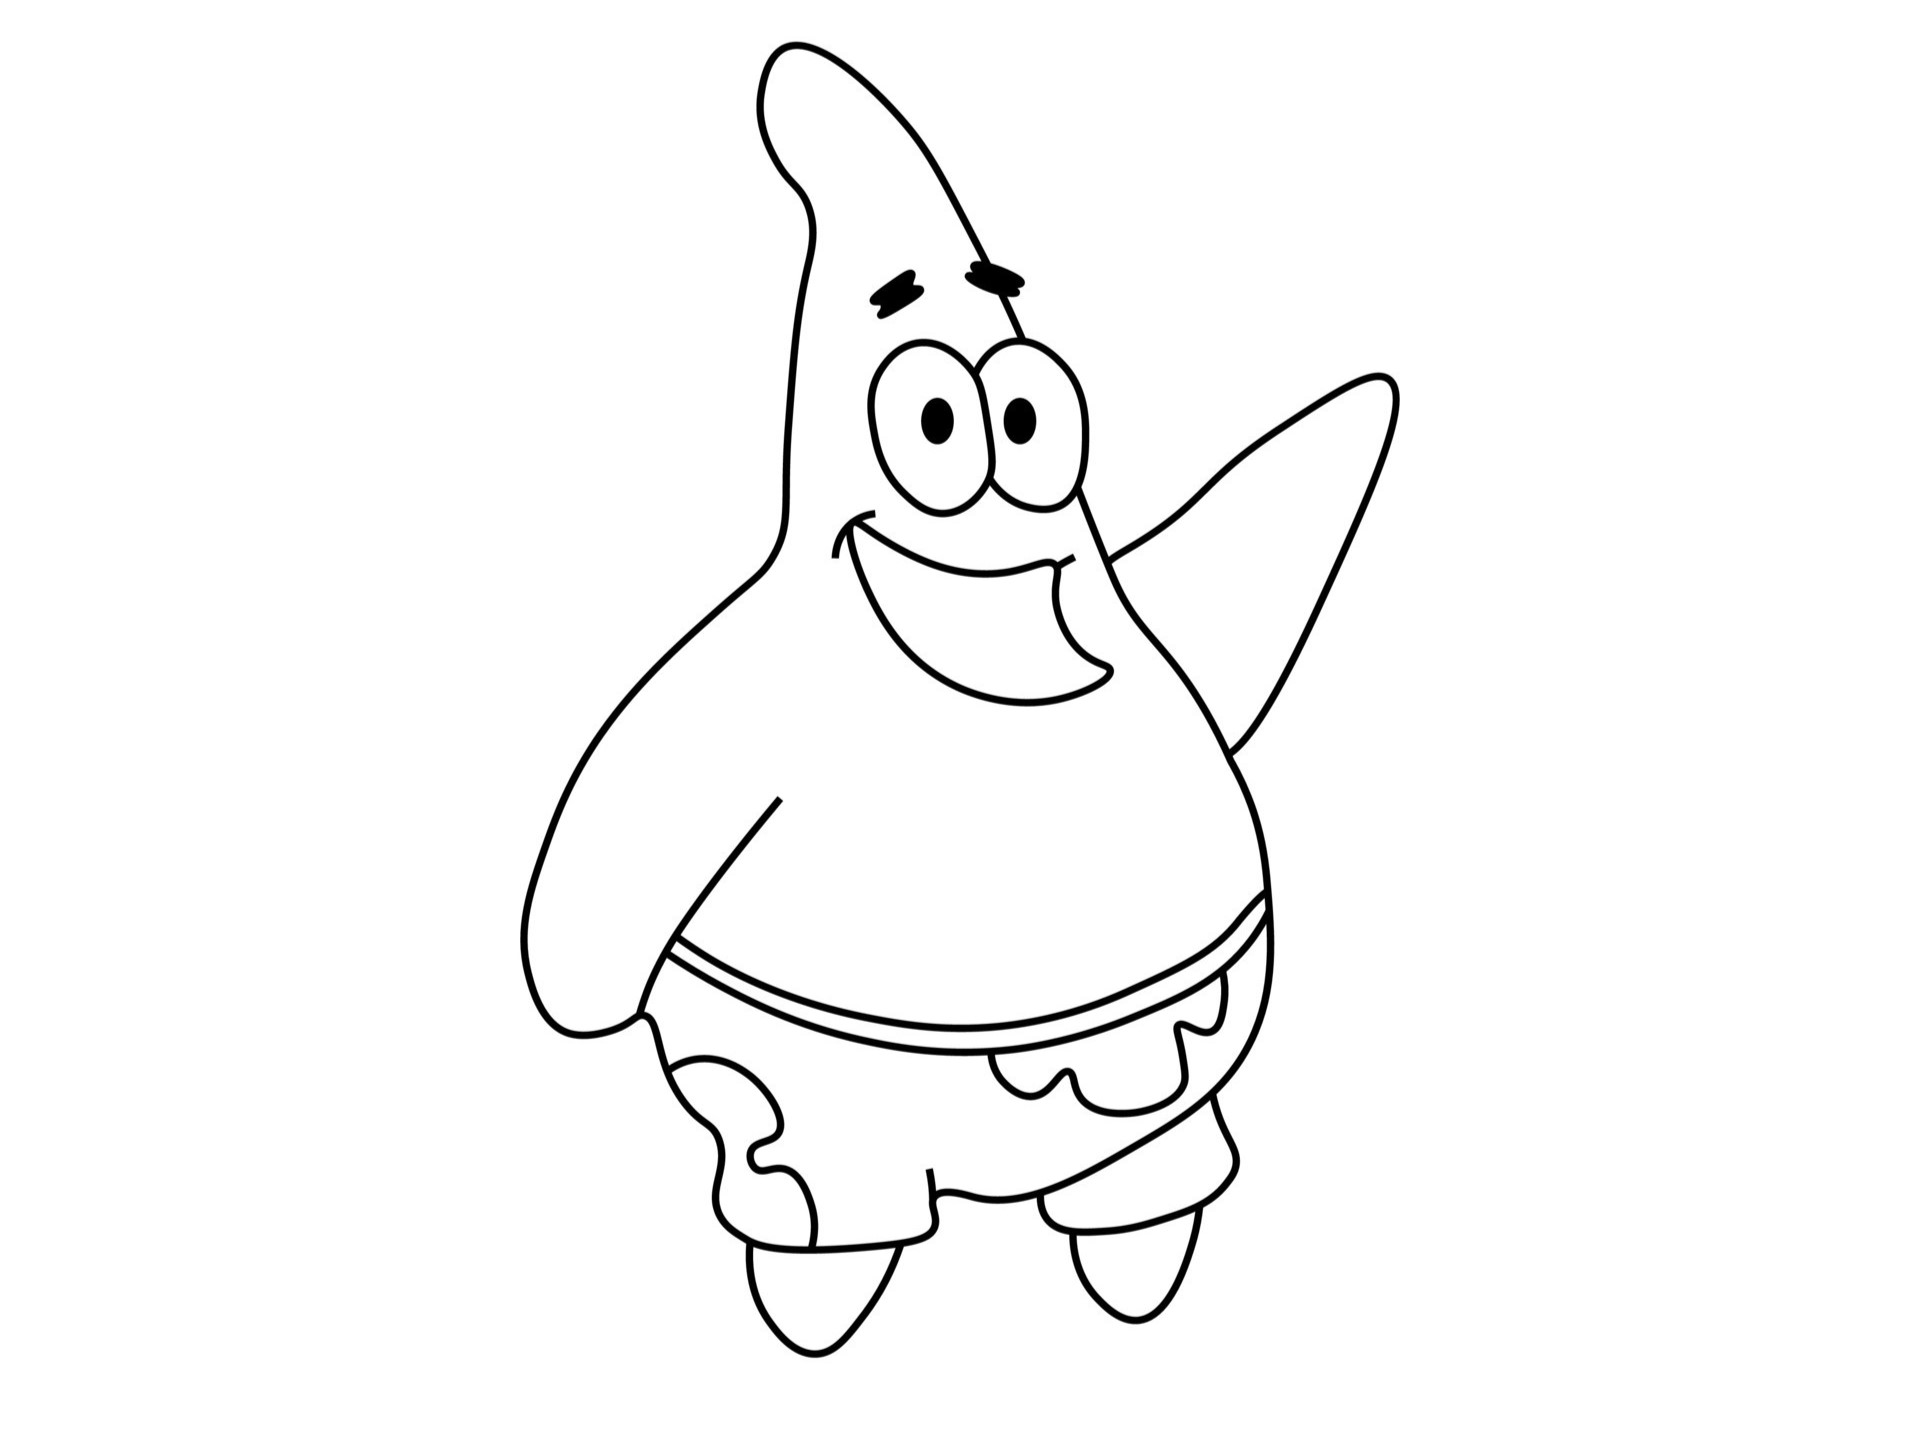 How To Draw Patrick Star